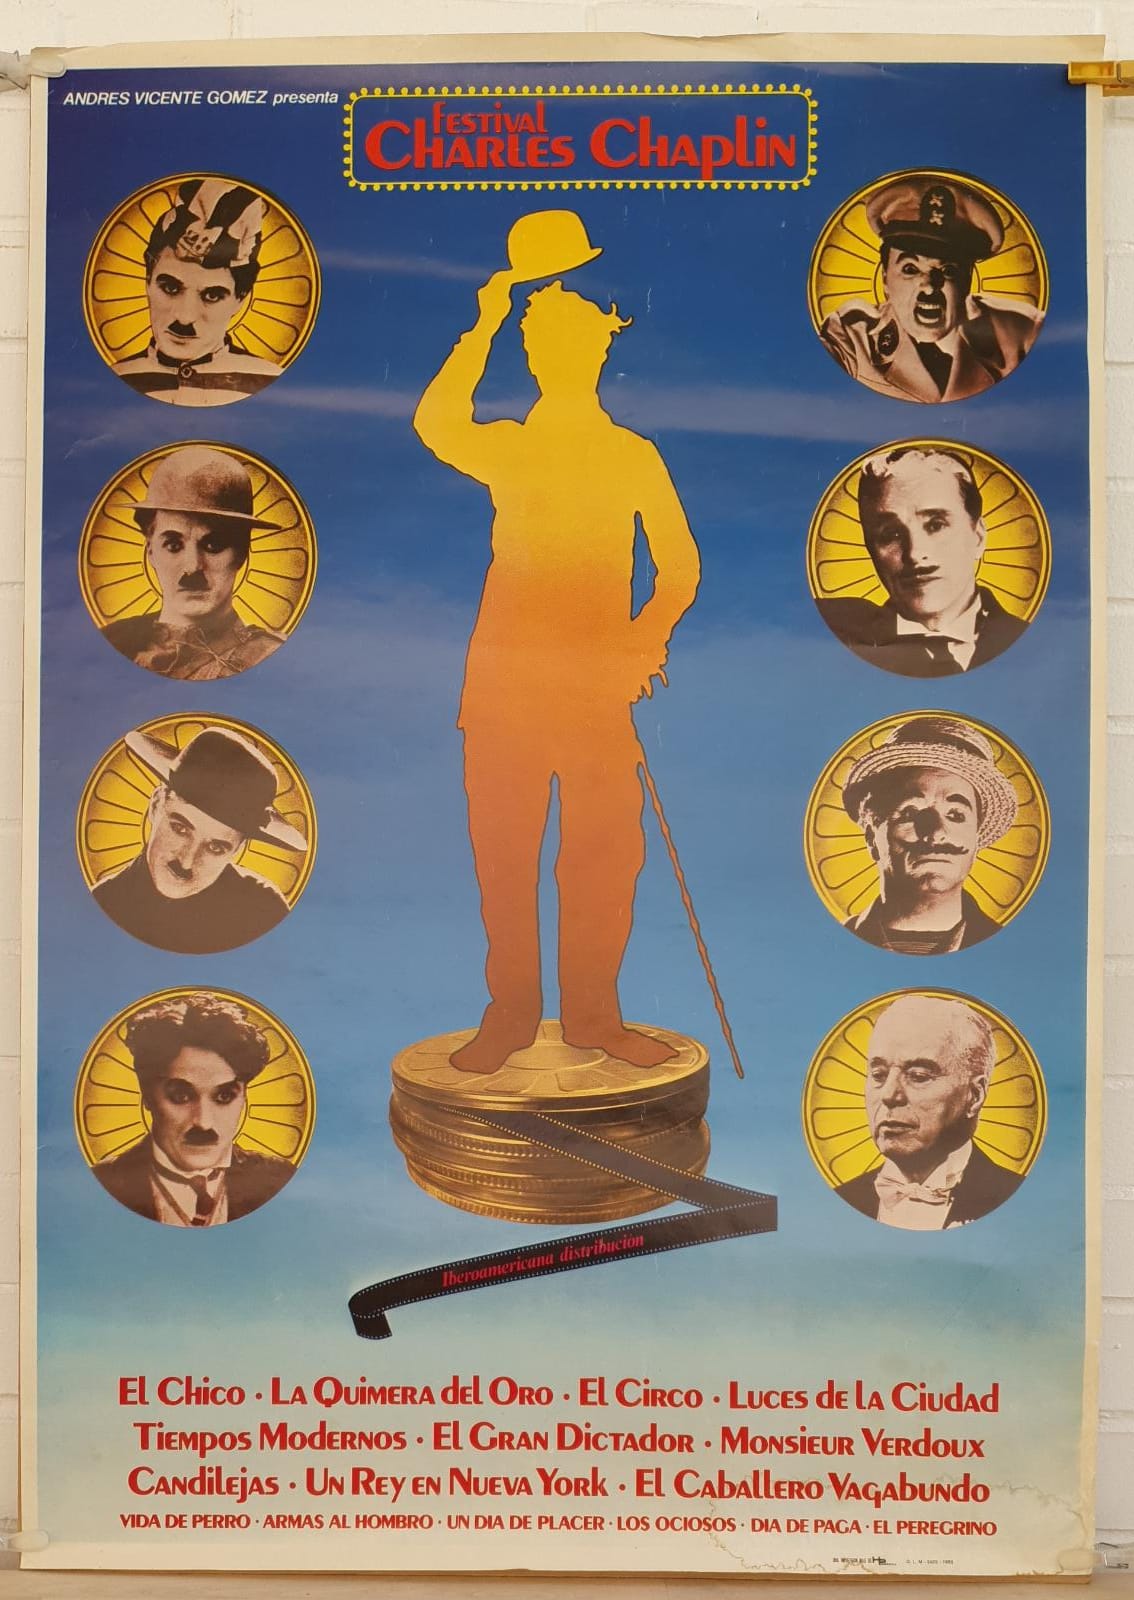 Festival Charles Chaplin. Cartel (100x70) de Estreno, 1983